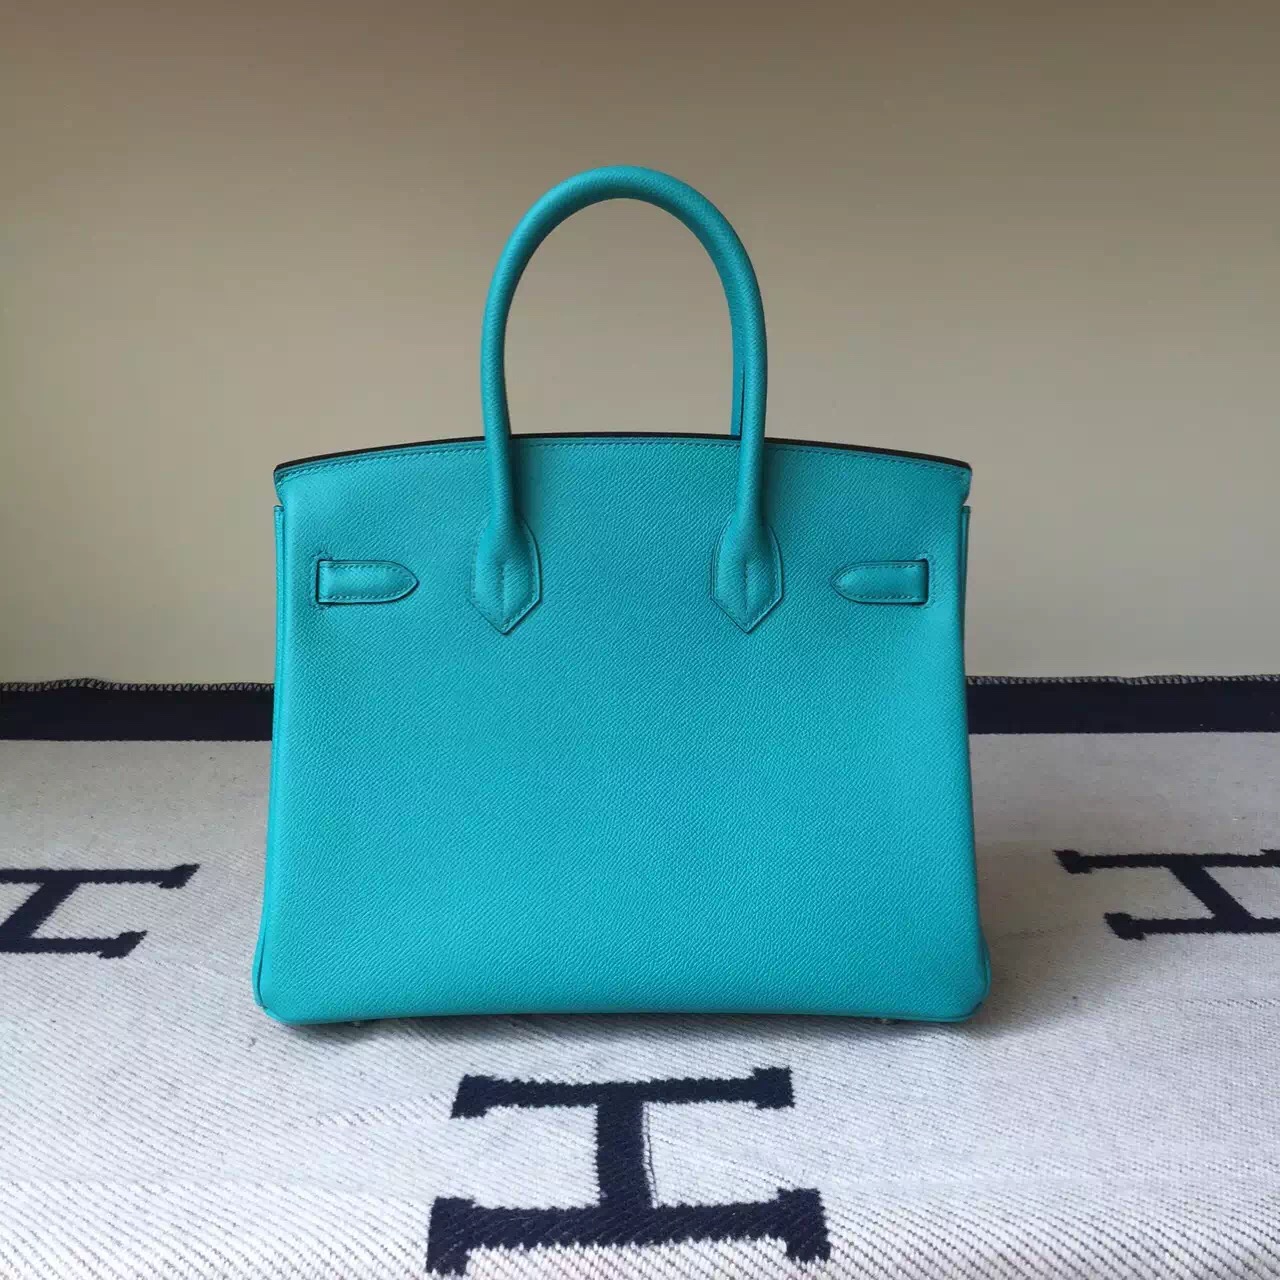 Discount Hermes Epsom Leather Birkin Bag 30cm in Peacock Blue